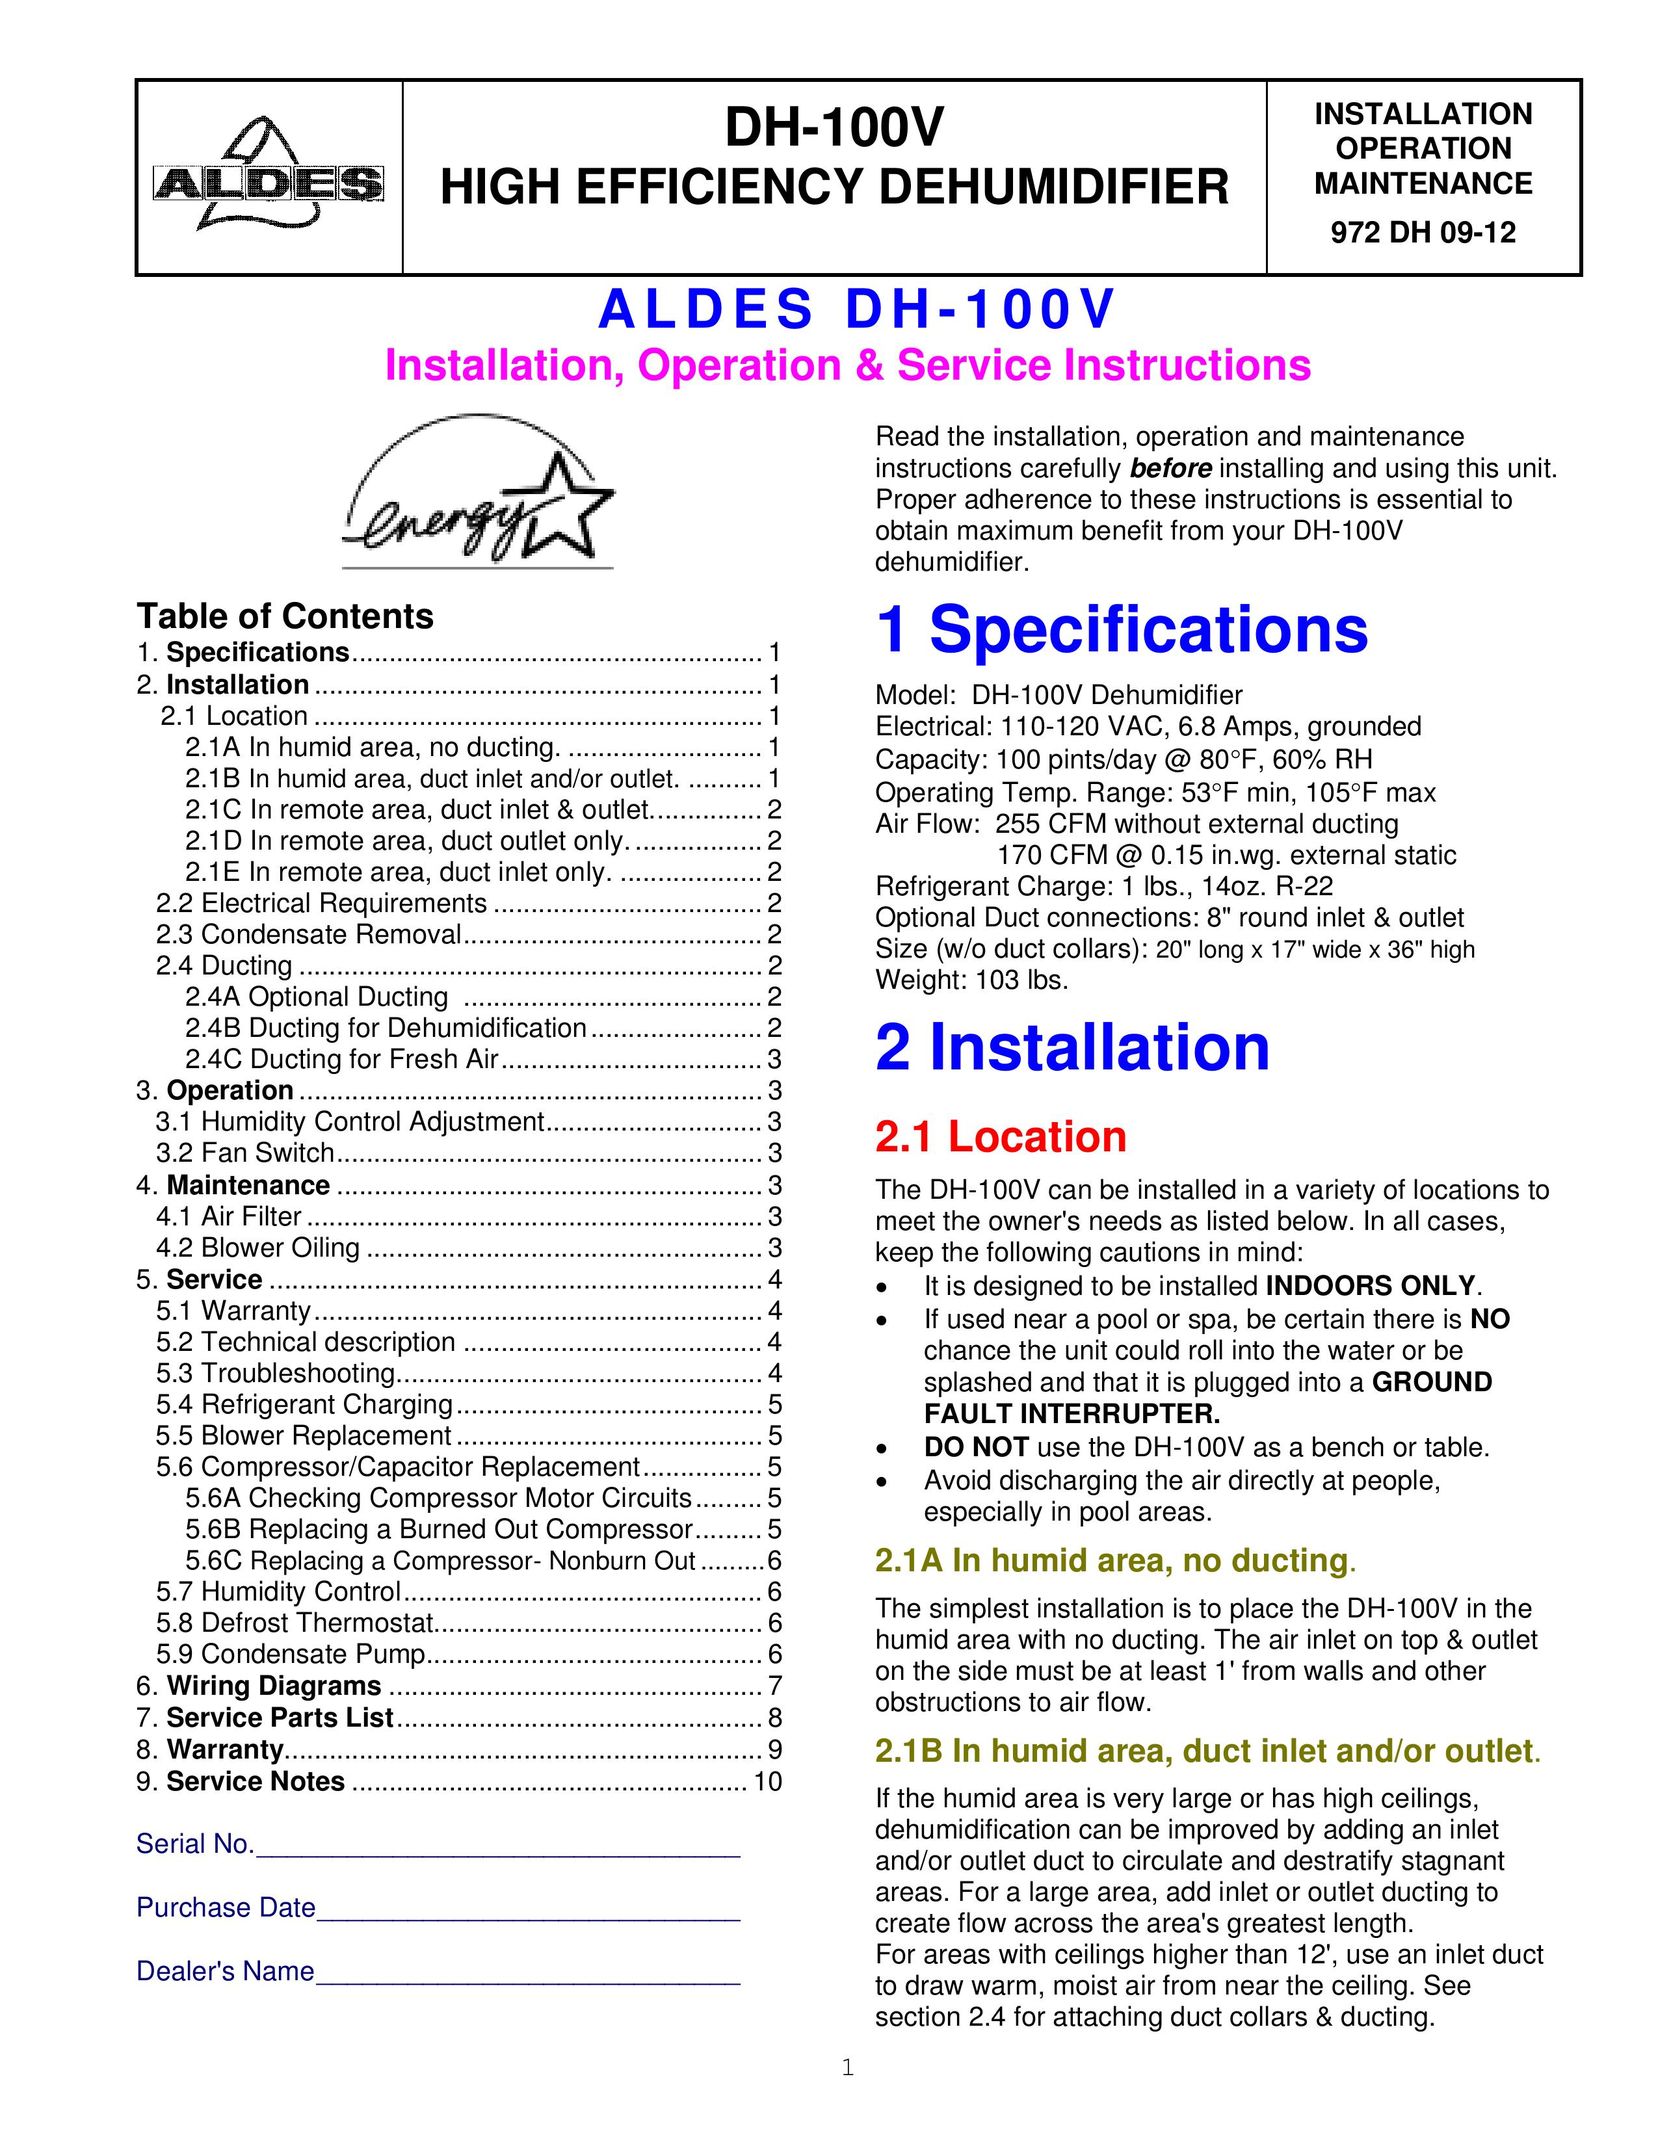 American Aldes DH-100V Dehumidifier User Manual